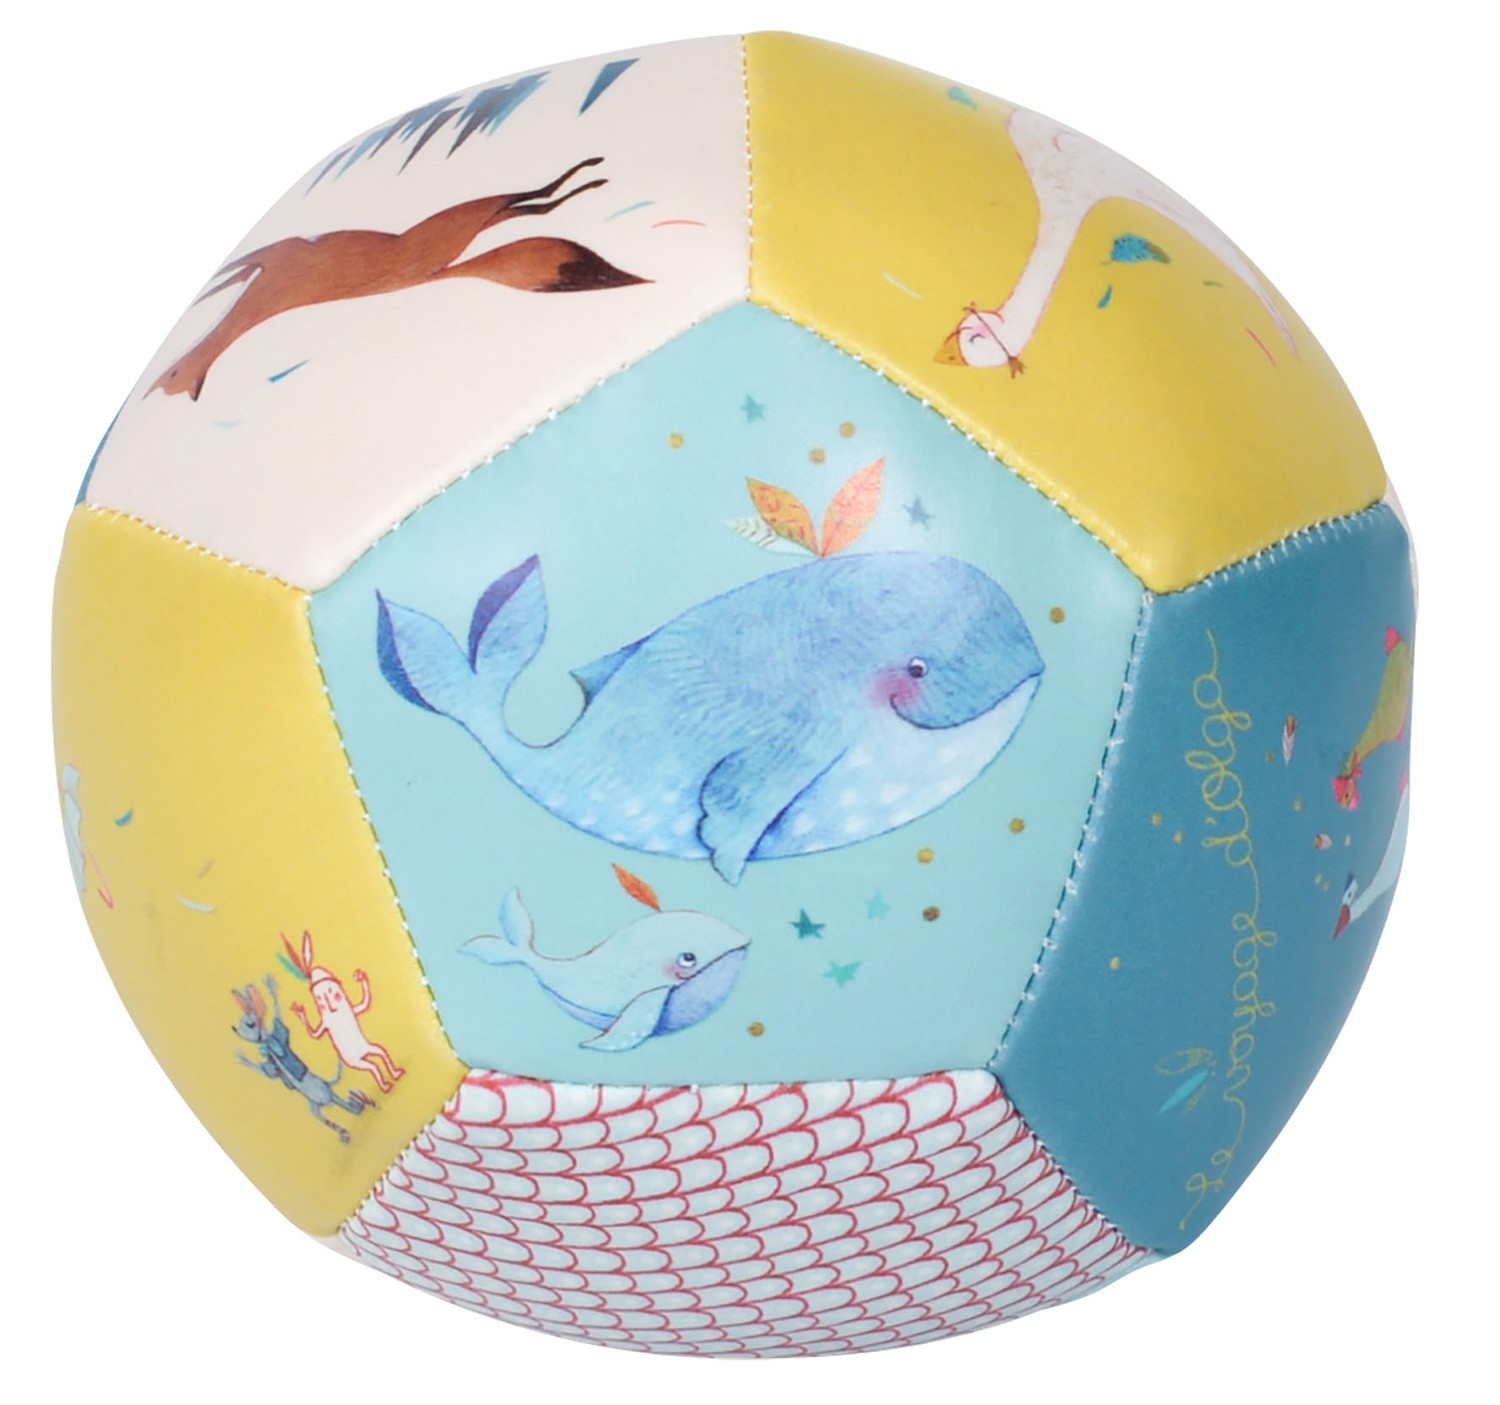 Ballon_souple_10cm_Le_Voyage_dOlga_Moulin_Roty